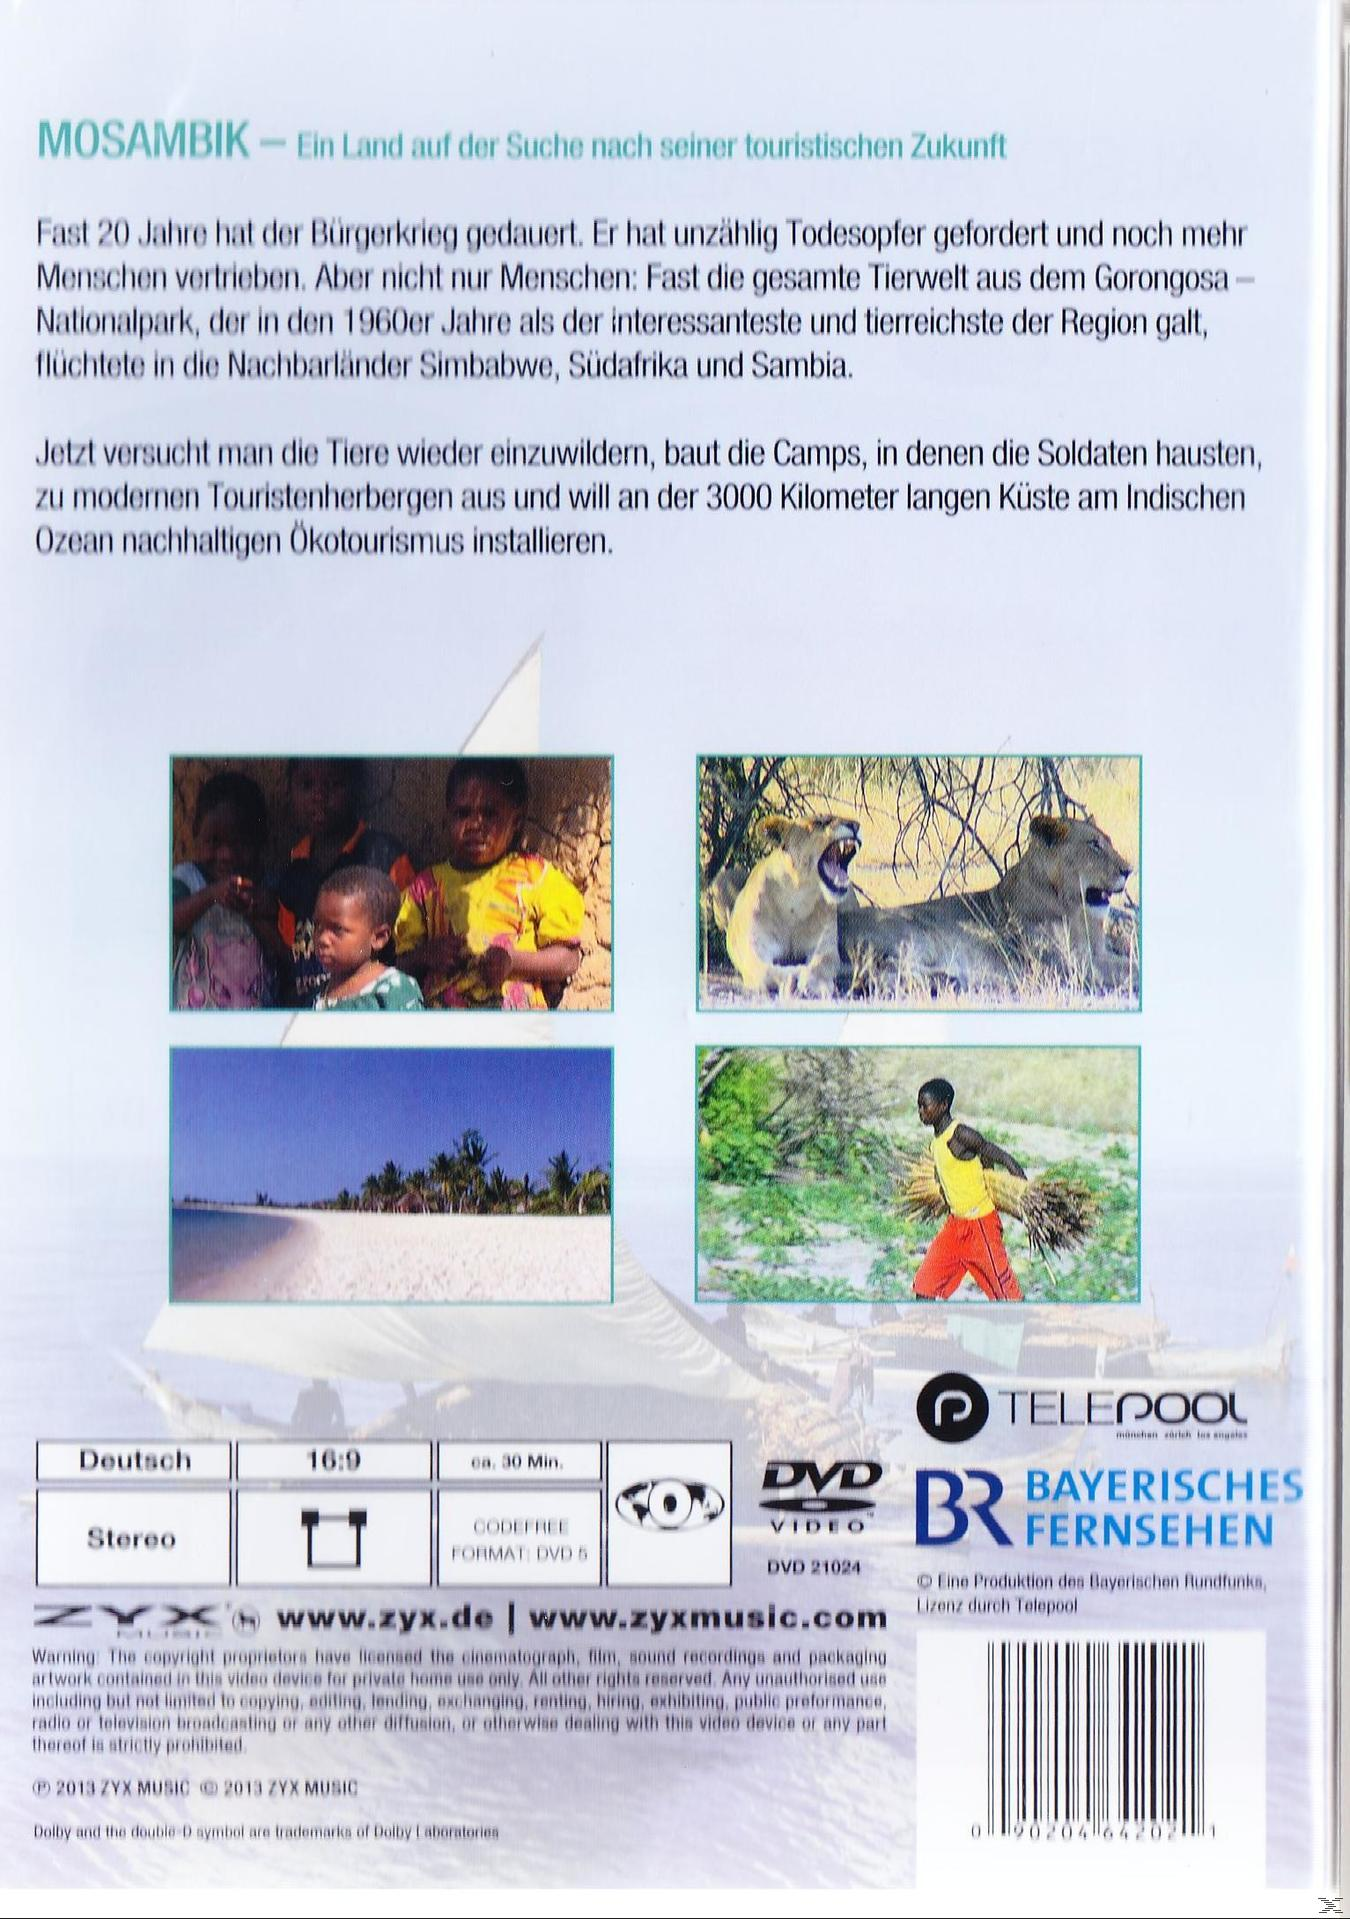 BR-Fernweh: Mosambik DVD